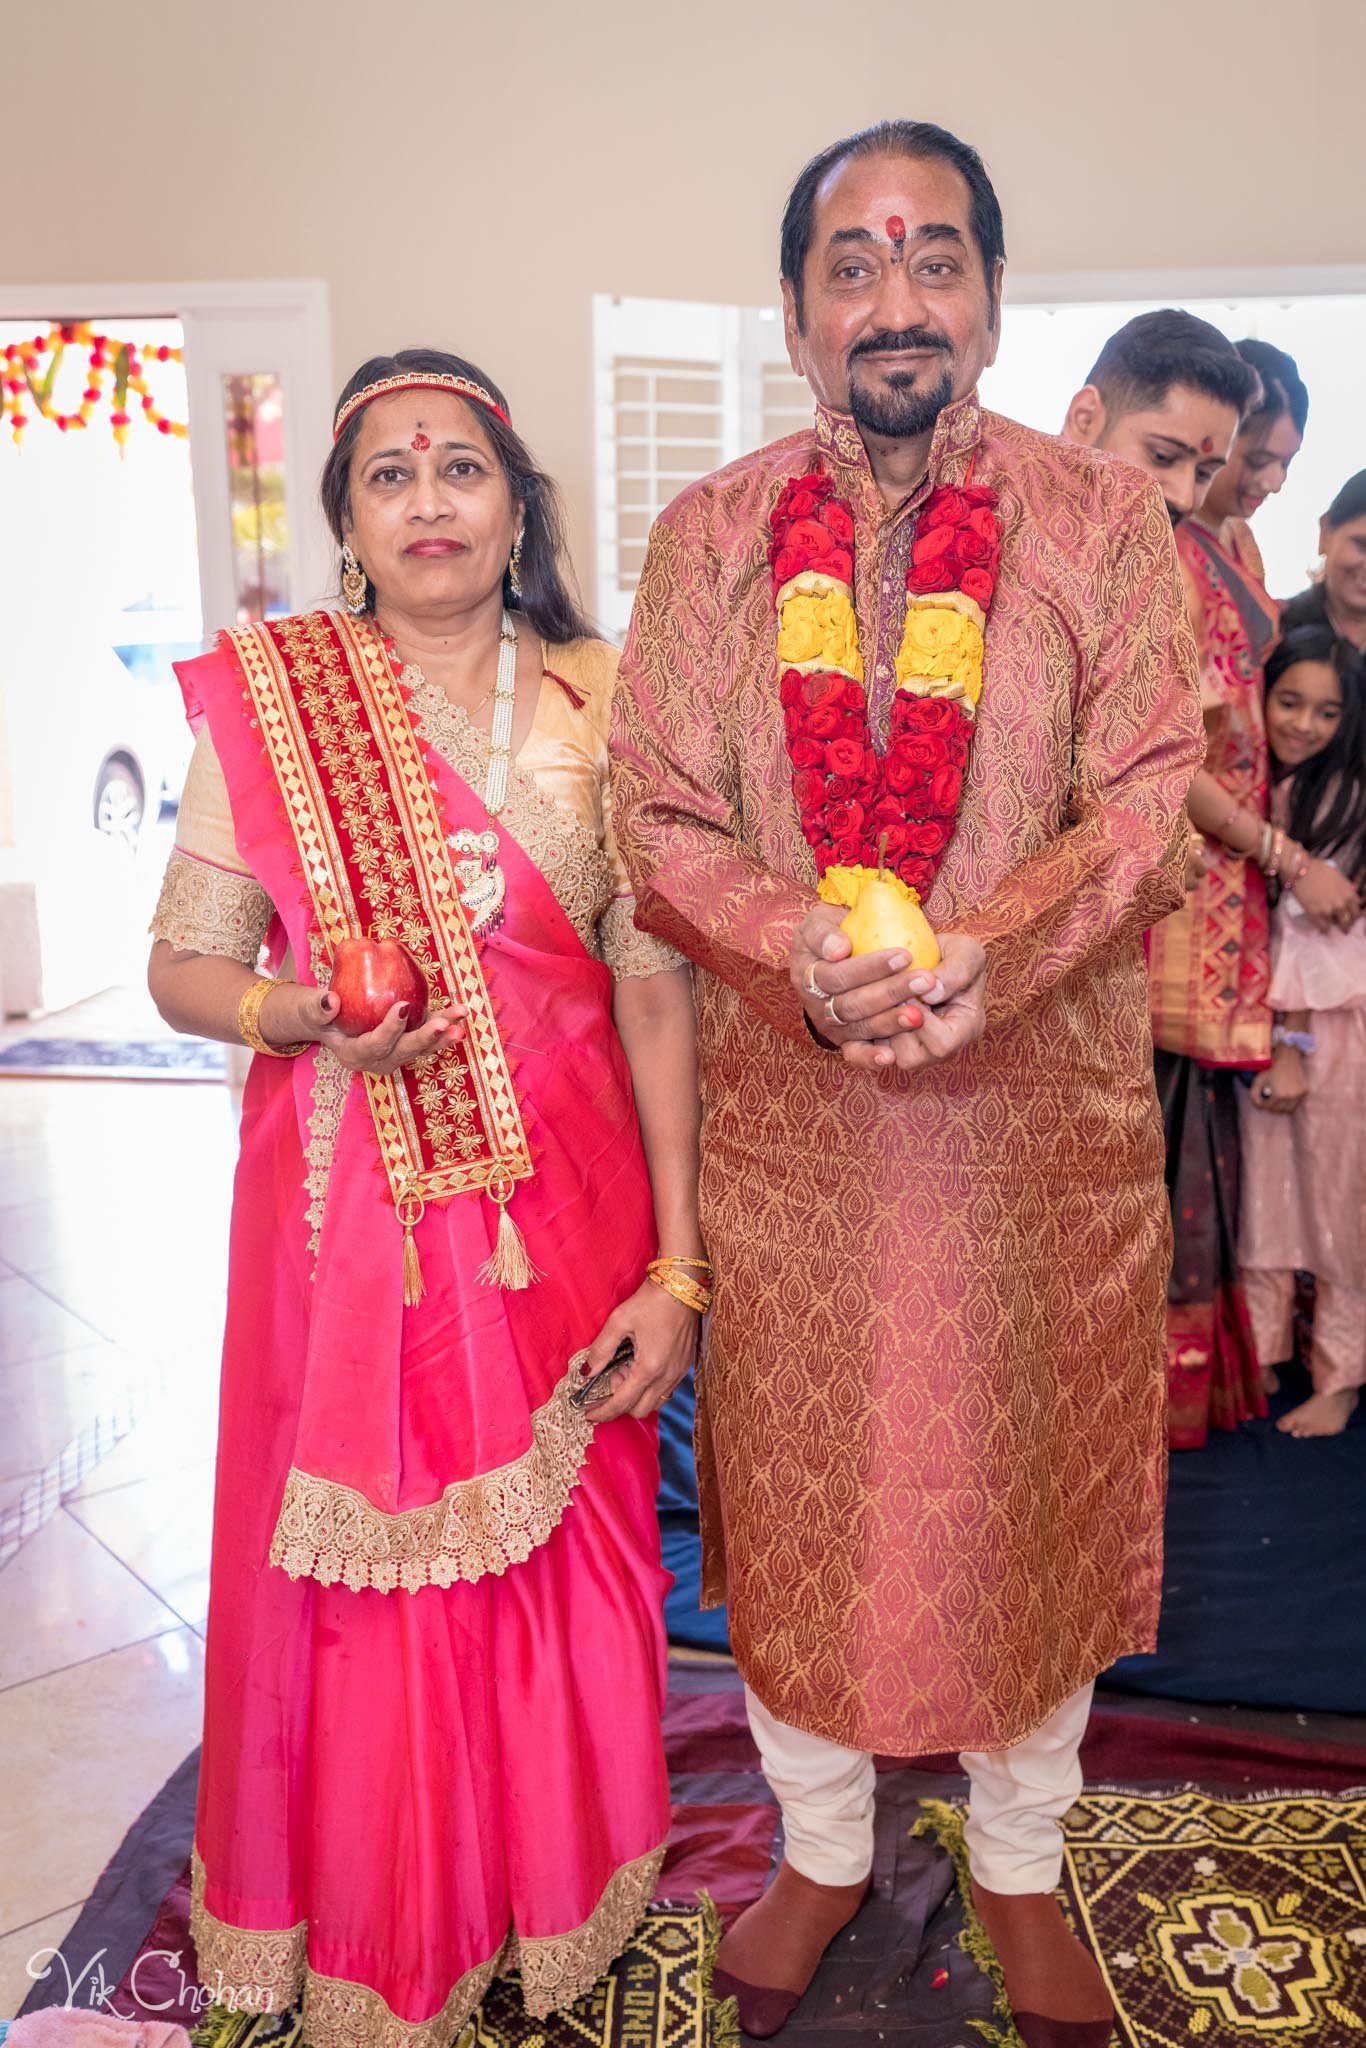 2022-02-03-Hely-&-Parth-Ganesh-Pooja-Indian-Wedding-Vik-Chohan-Photography-Photo-Booth-Social-Media-VCP-135.jpg